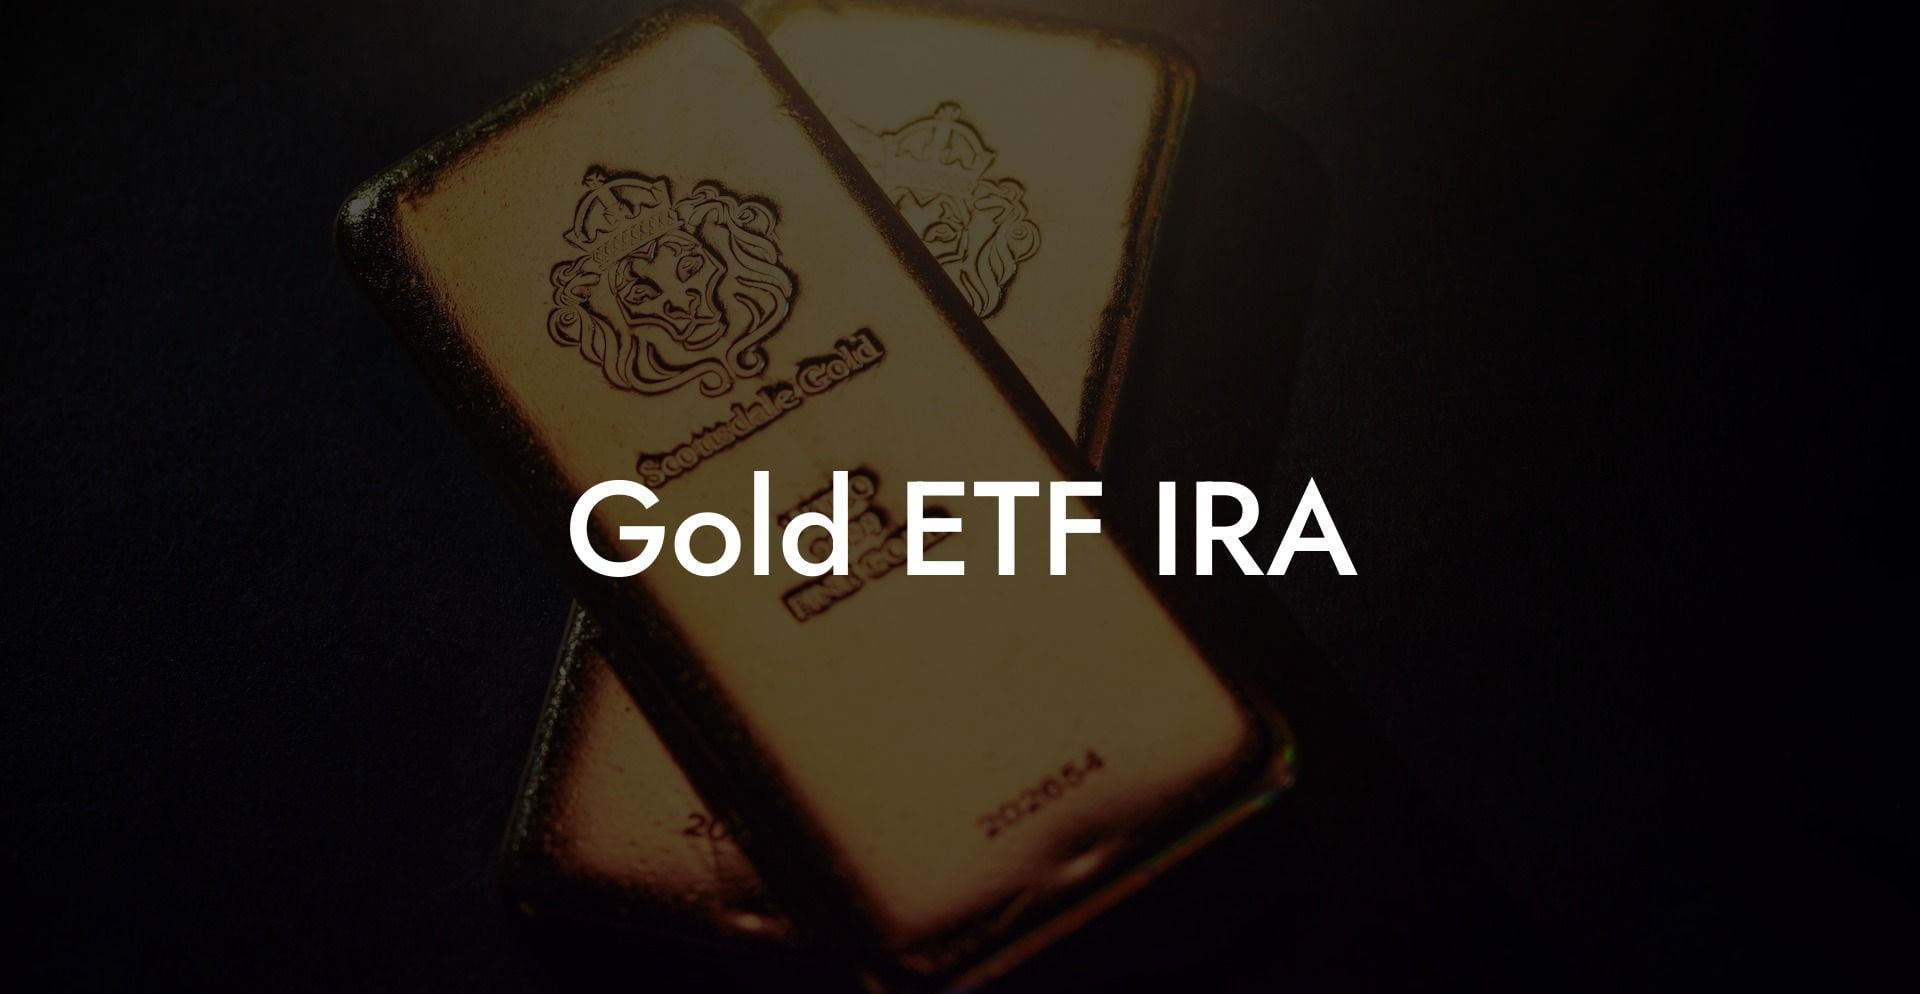 Gold ETF IRA